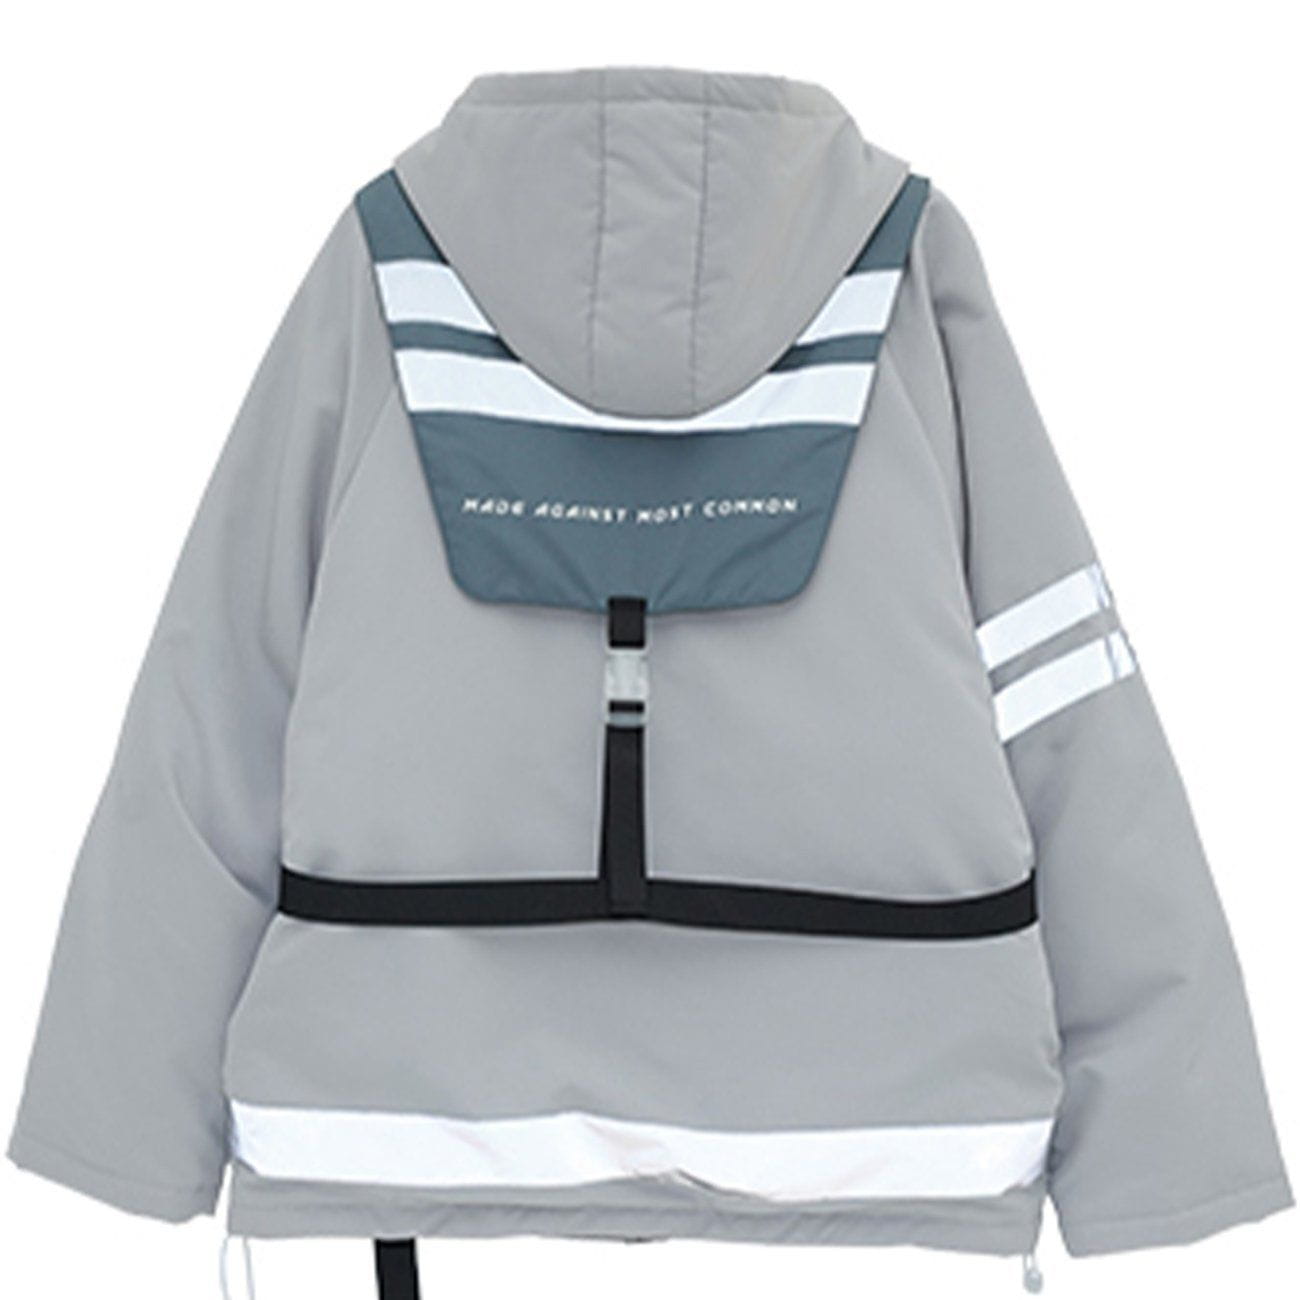 Eprezzy® - Technical Vest Reflective Winter Coat Streetwear Fashion - eprezzy.com